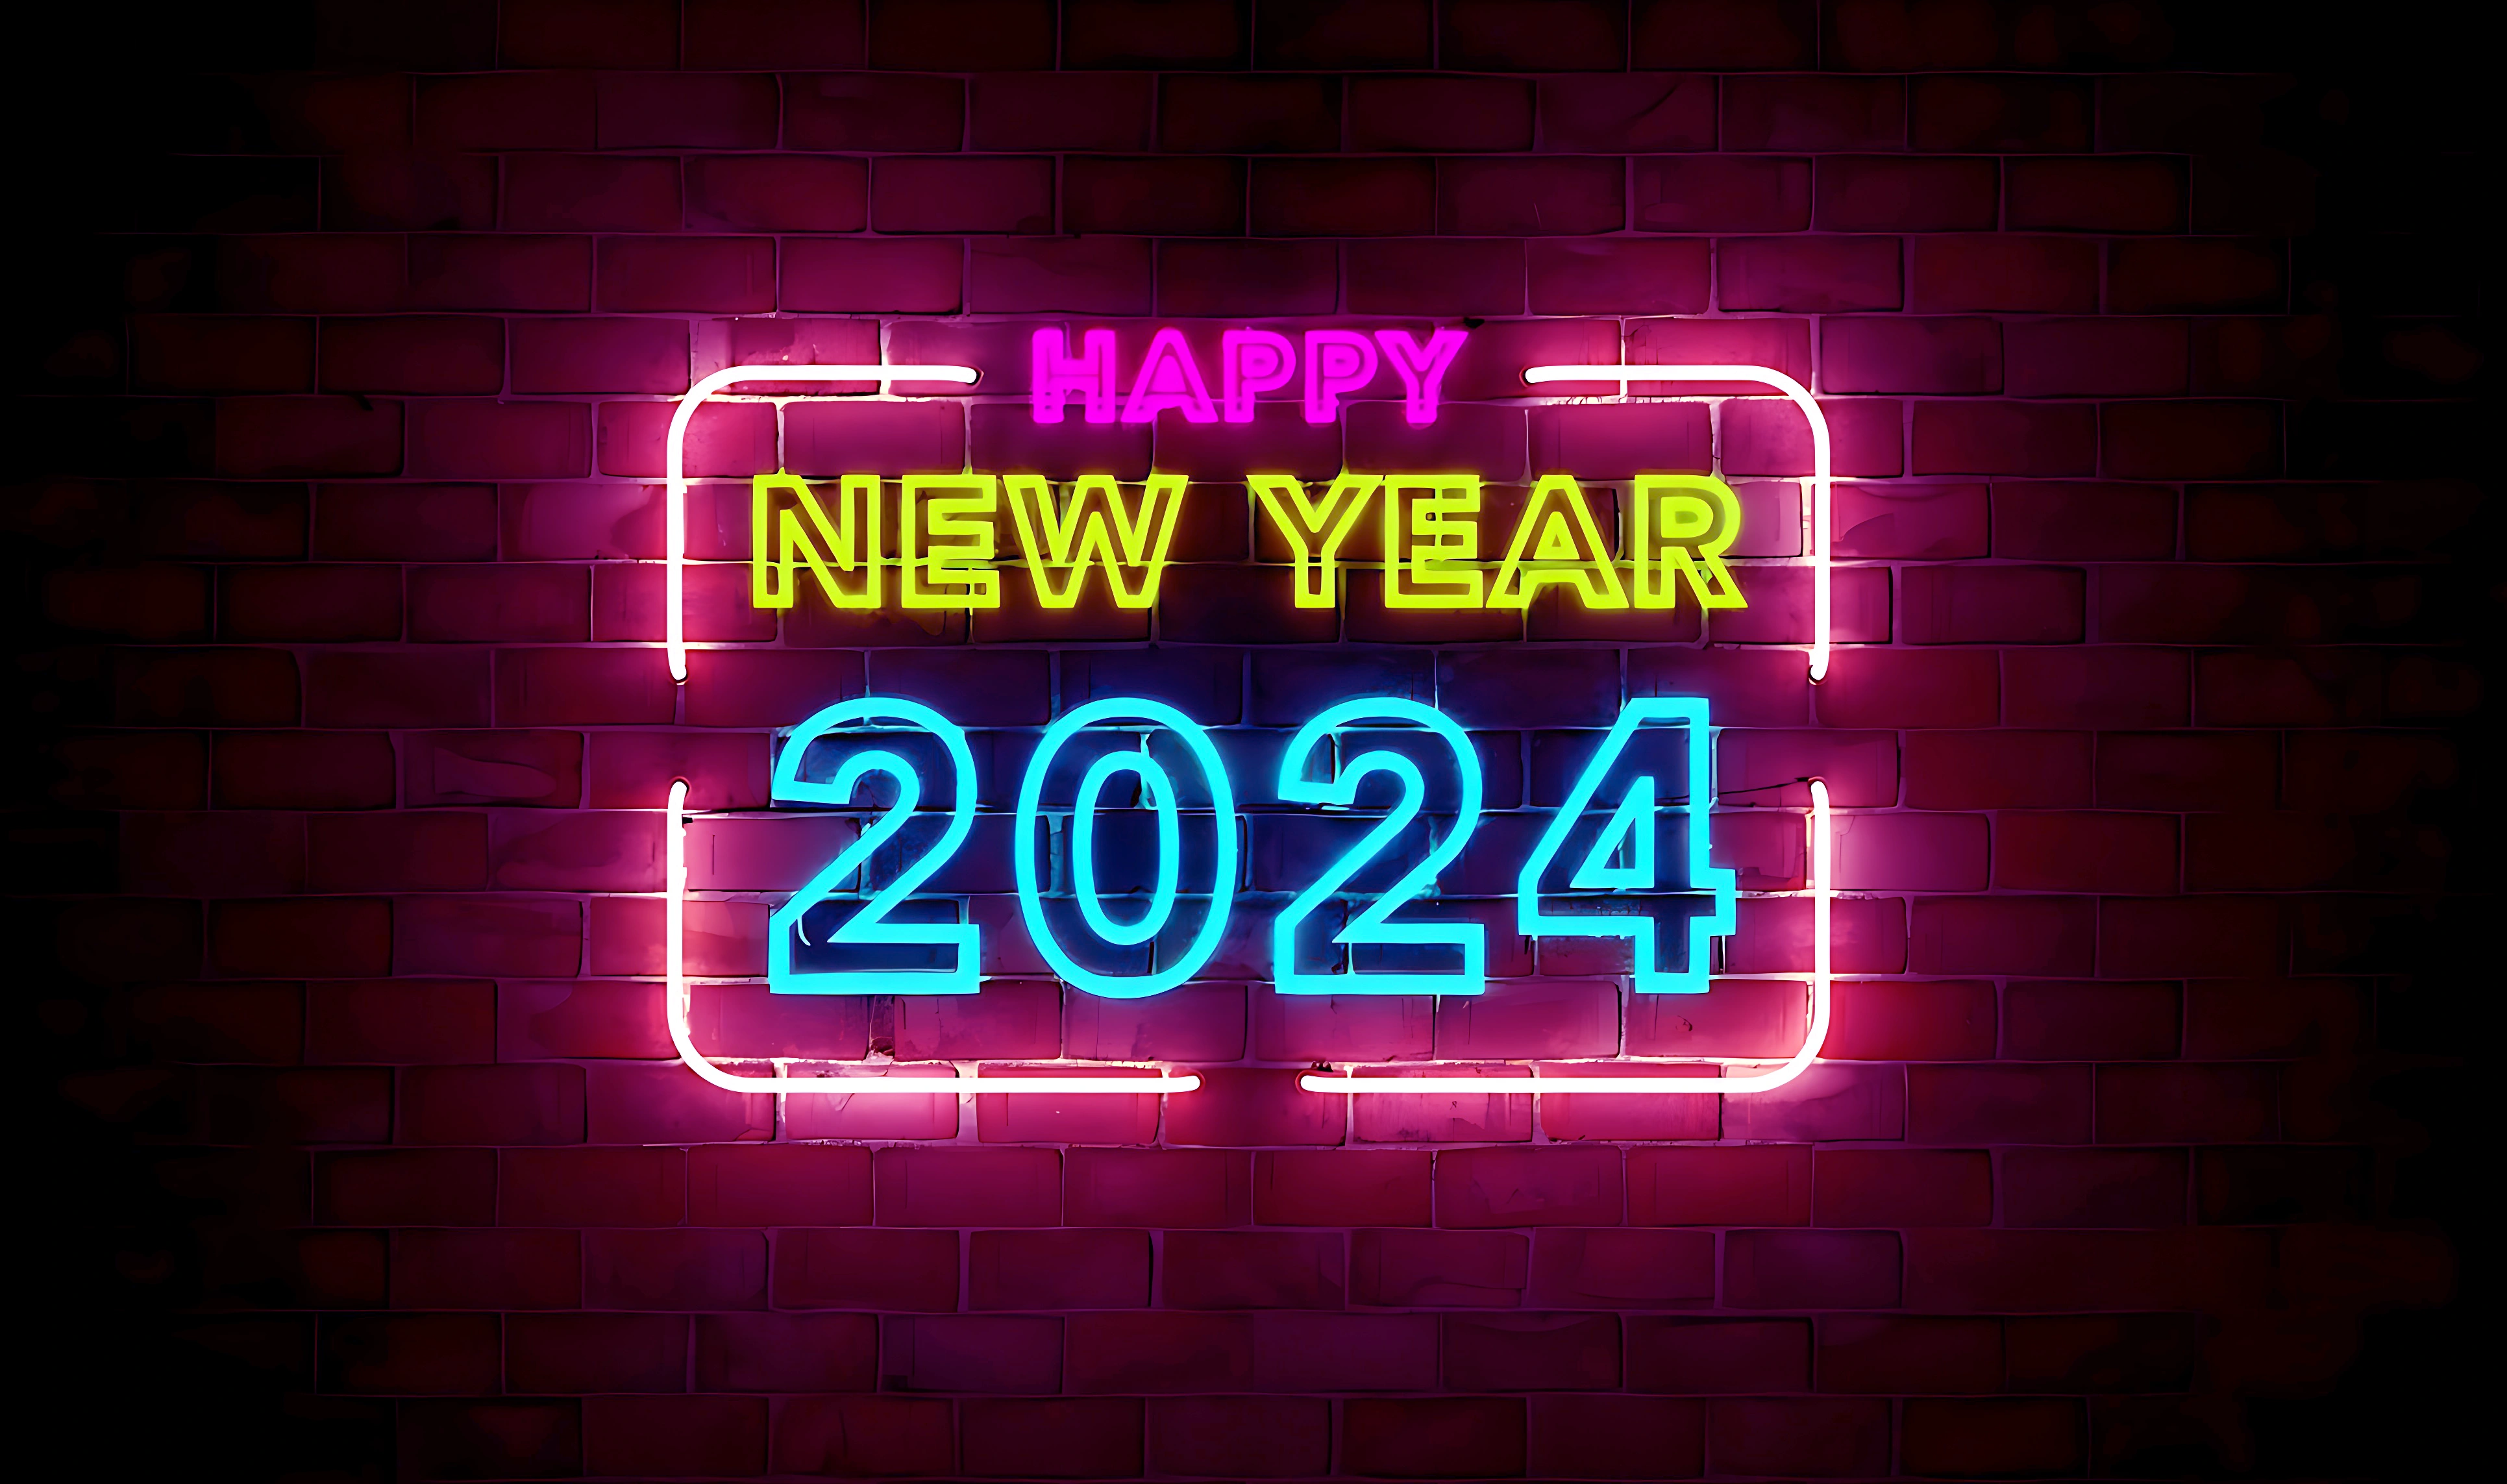 happy new year 2024 neon light on wall 4K uhd wallpaper download